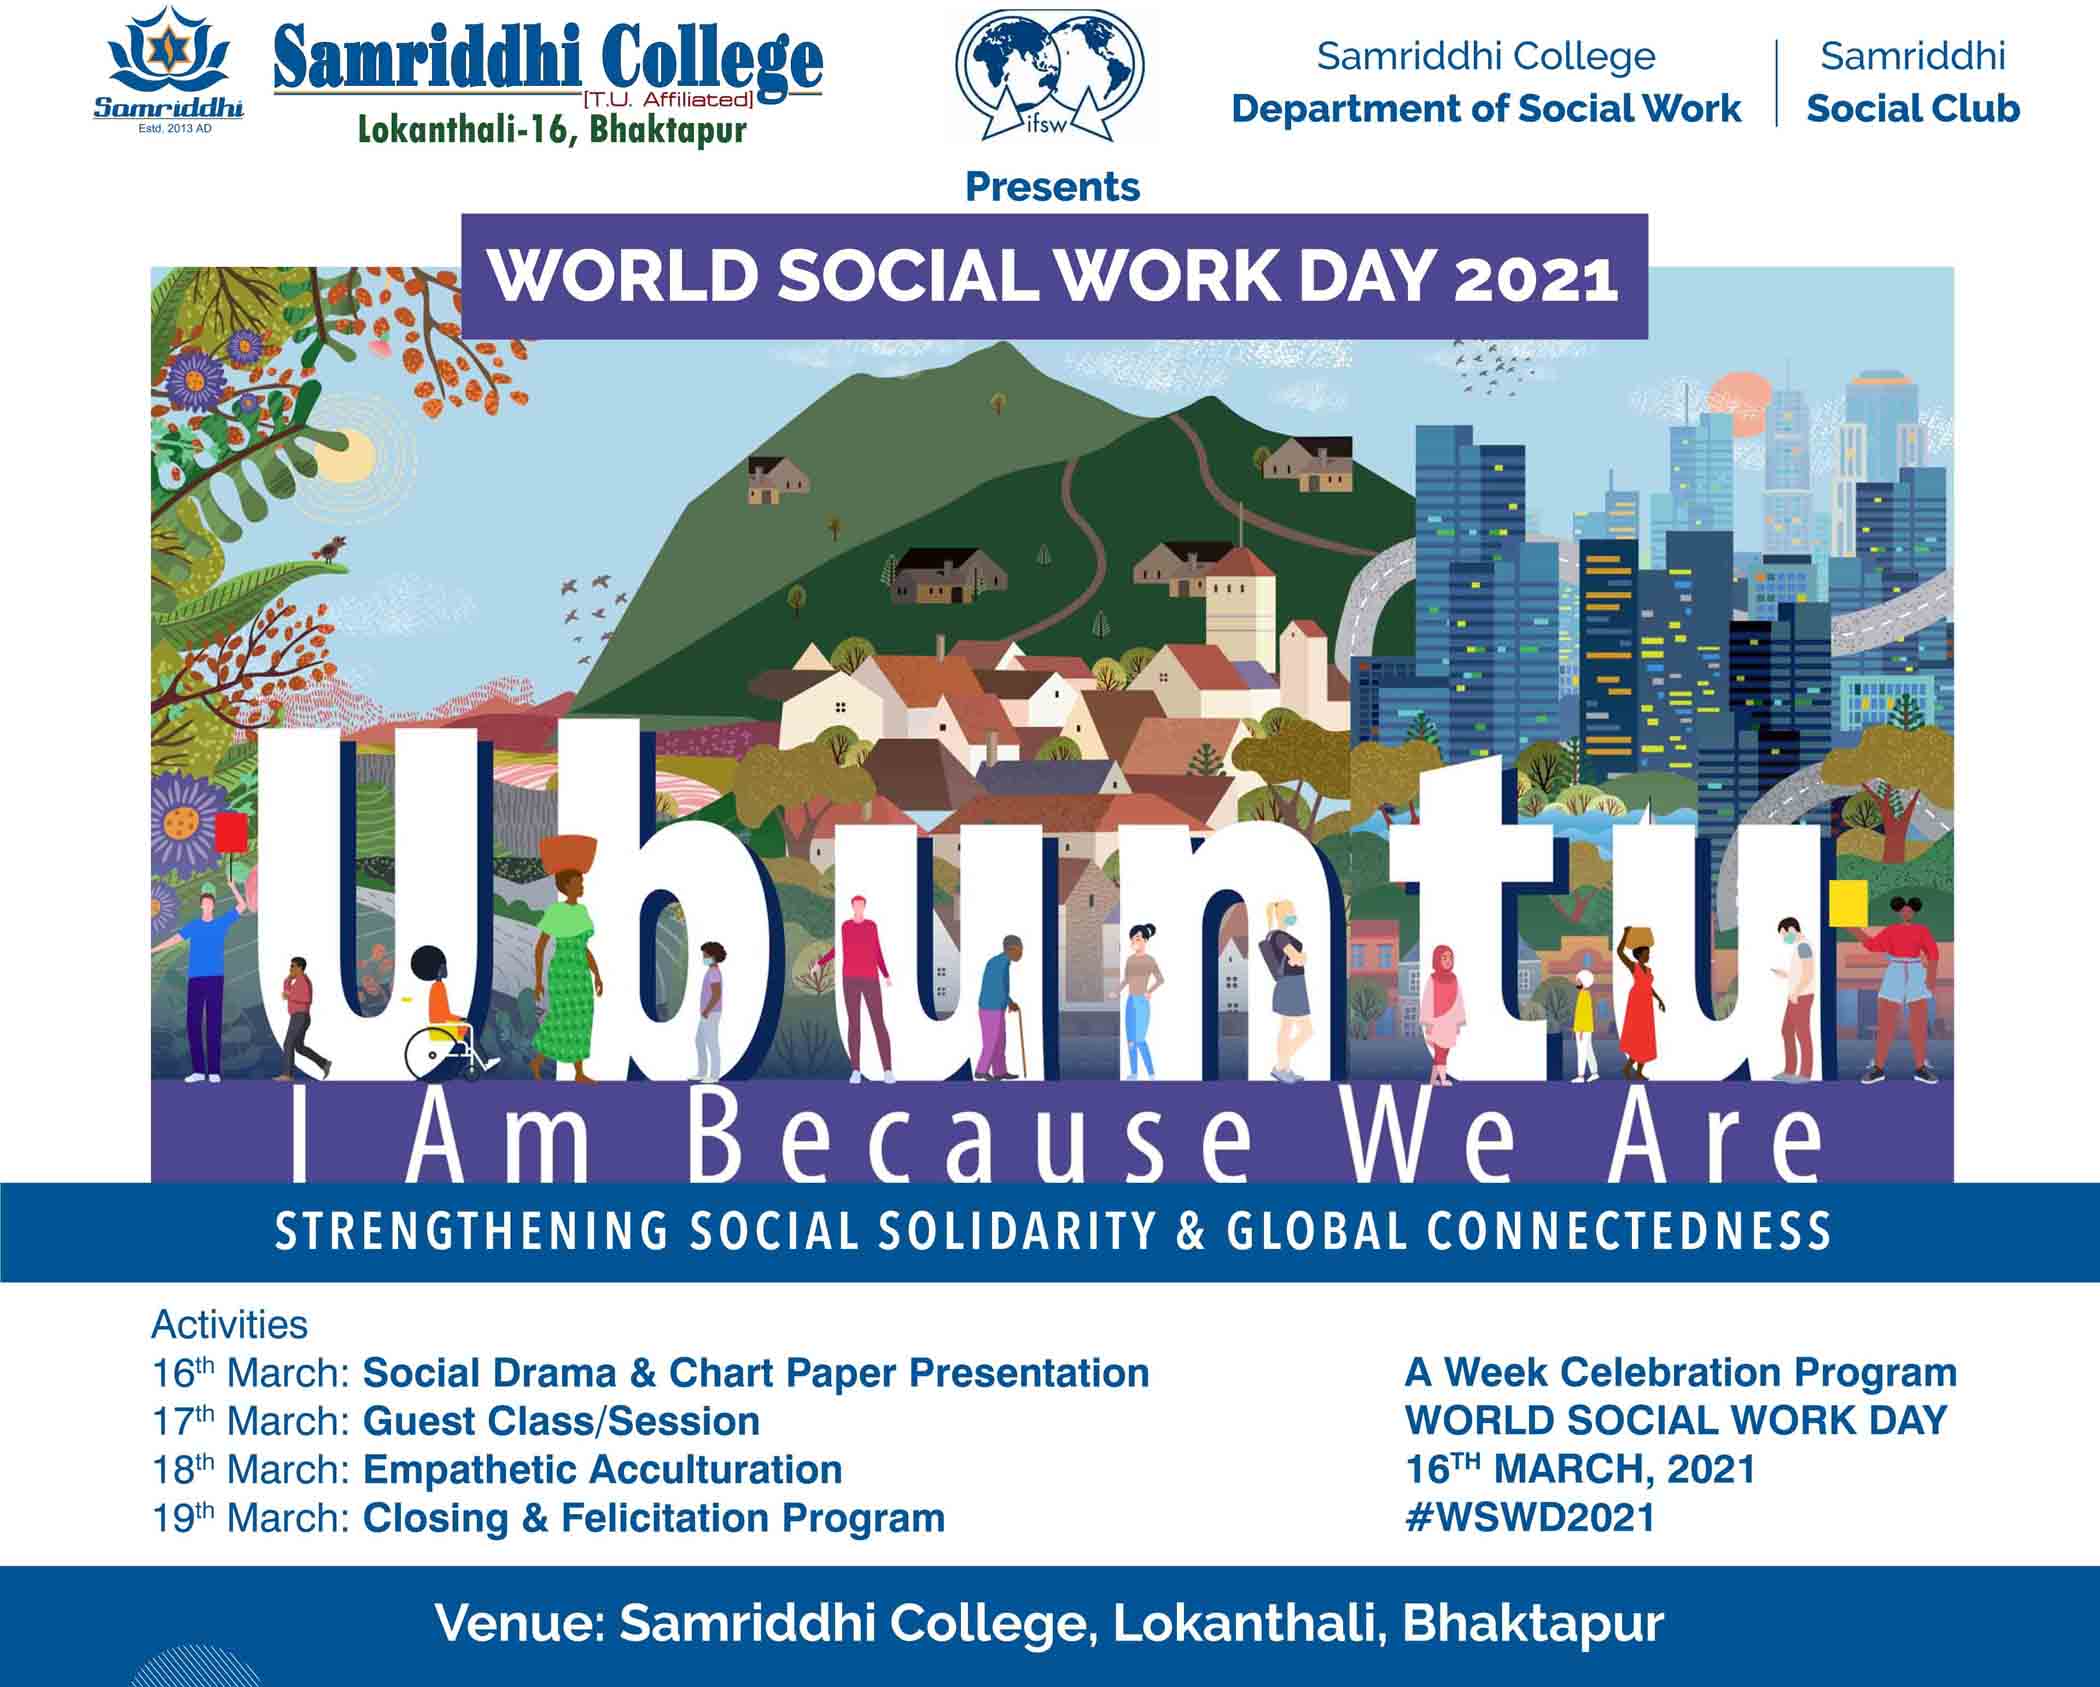 World Social Work Day Celebration Program 2021 Samriddhi College